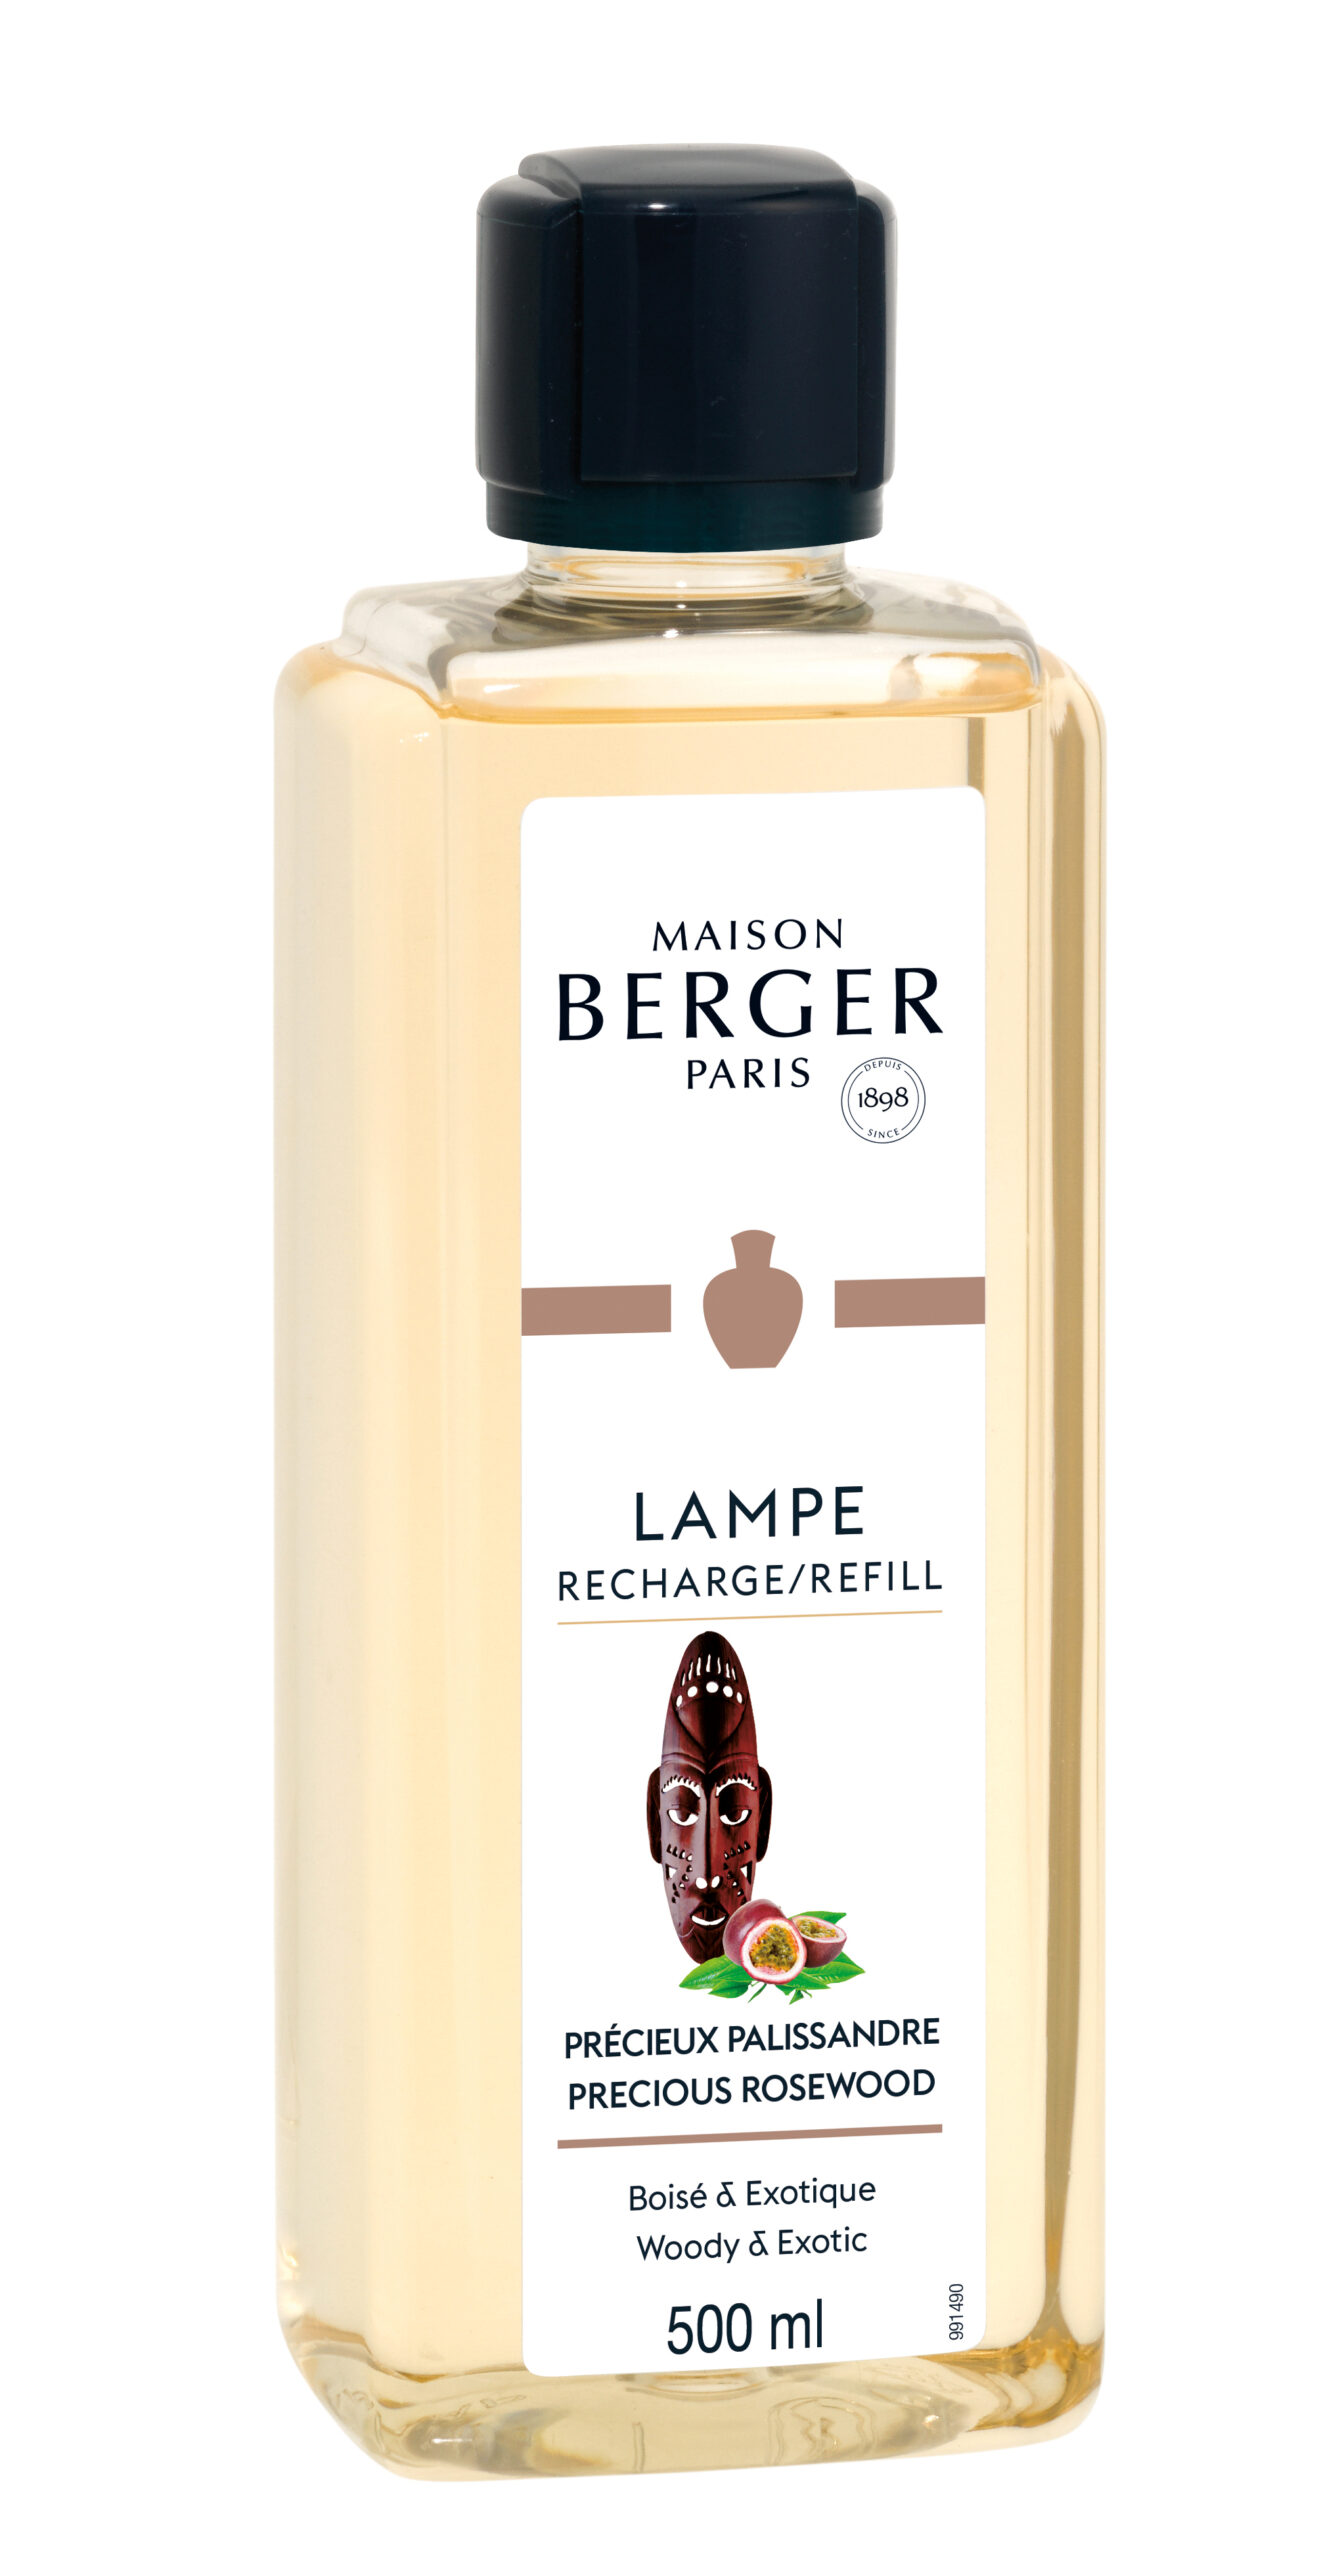 Maison Berger Paris - parfum Precious Rosewood - 500 ml